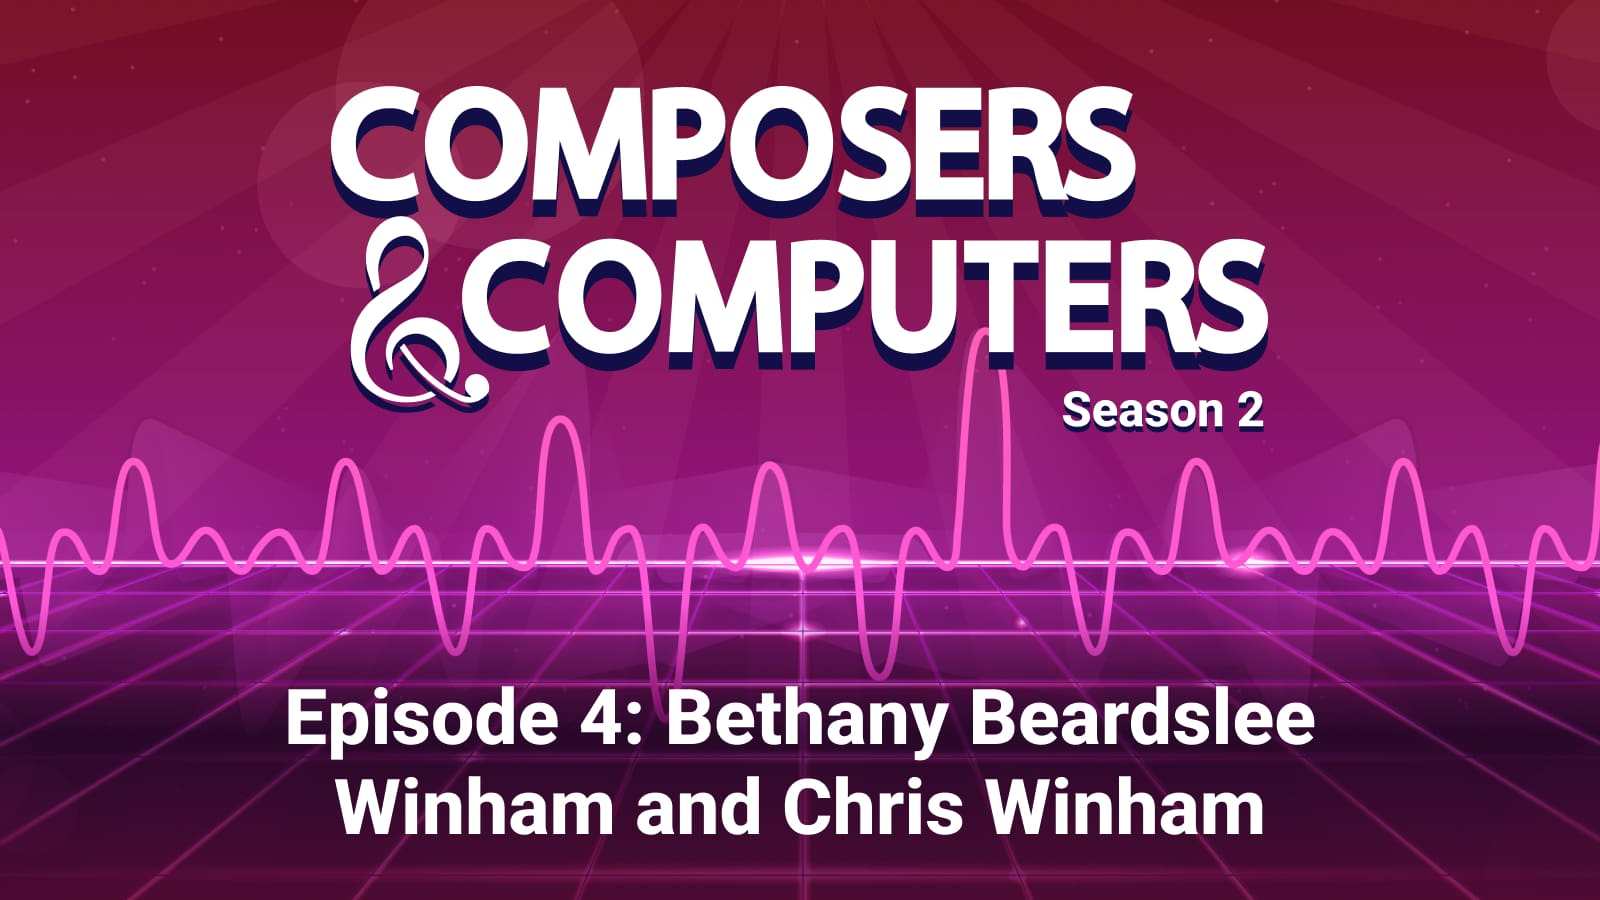 Composers & Computers Episode 4: Bethany Beardslee Winham and Chris Winham